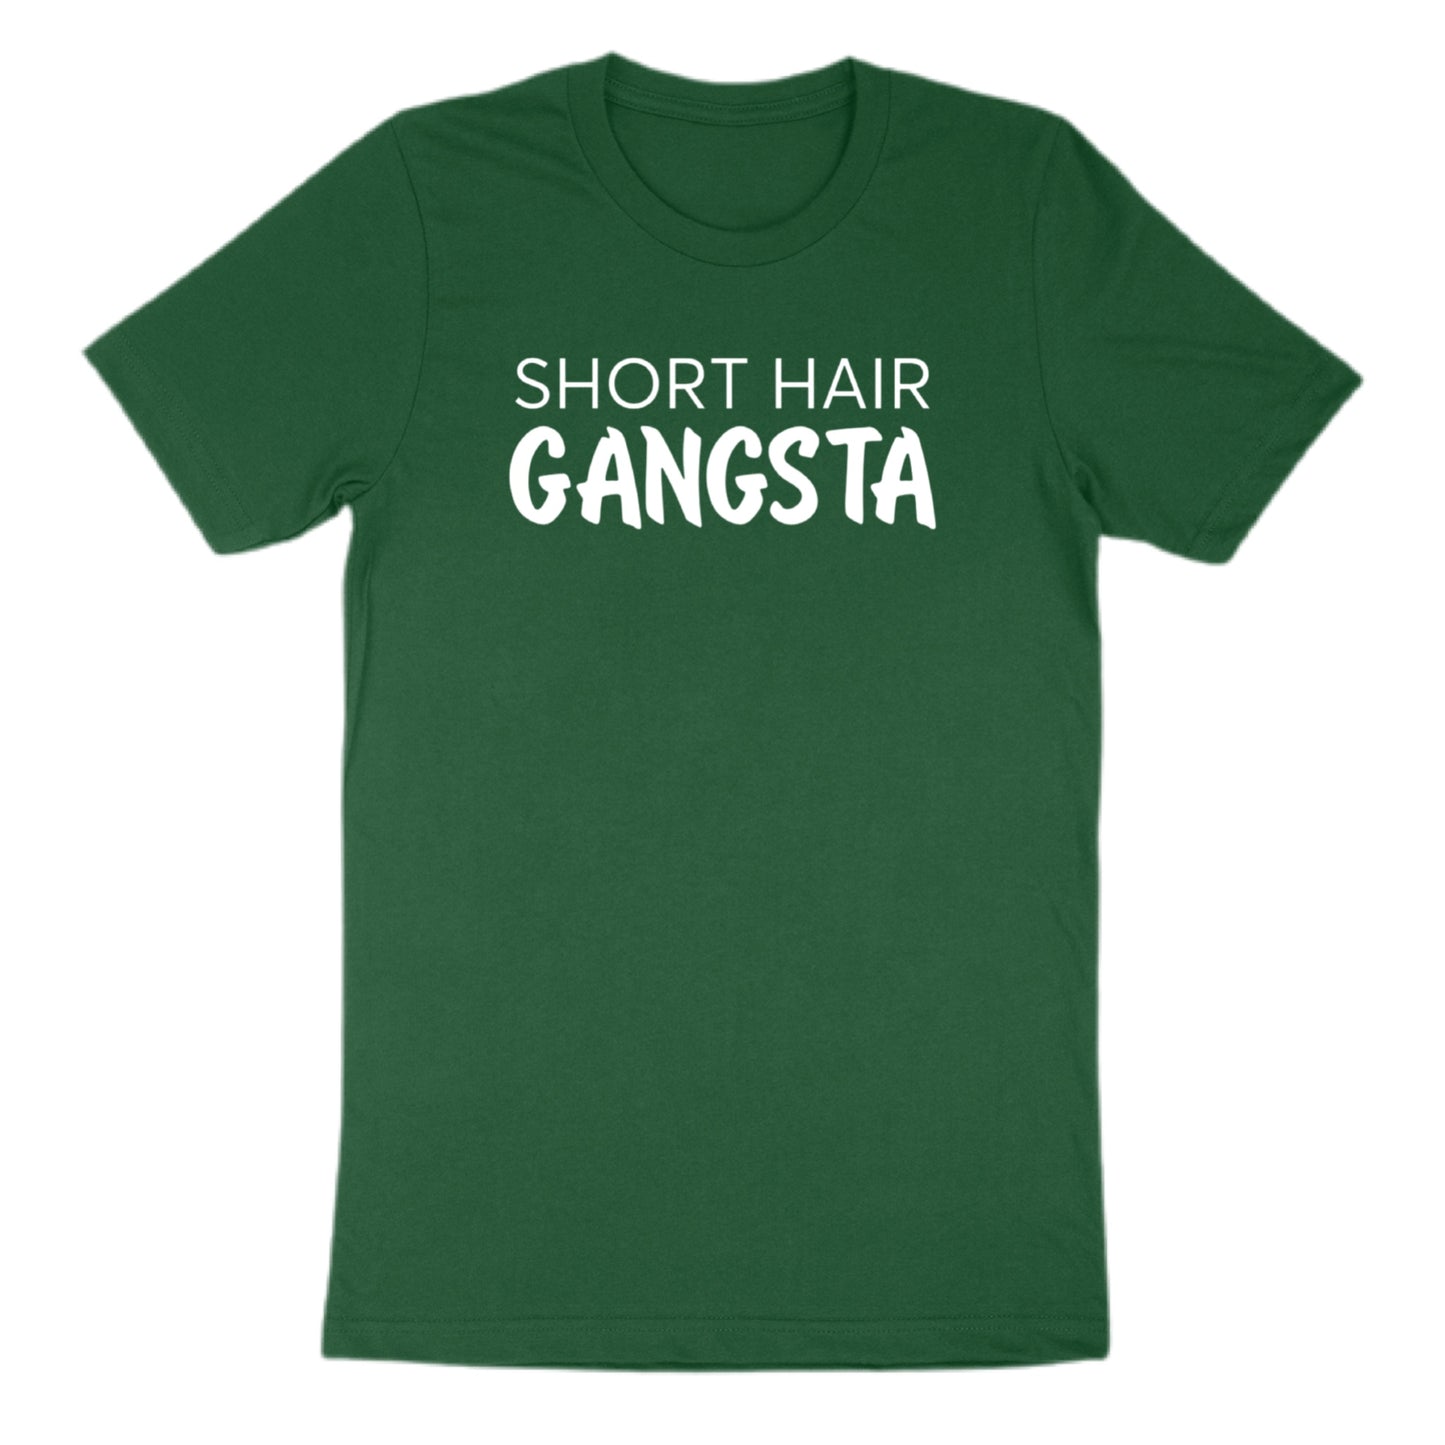 Short Hair Gangsta Tee